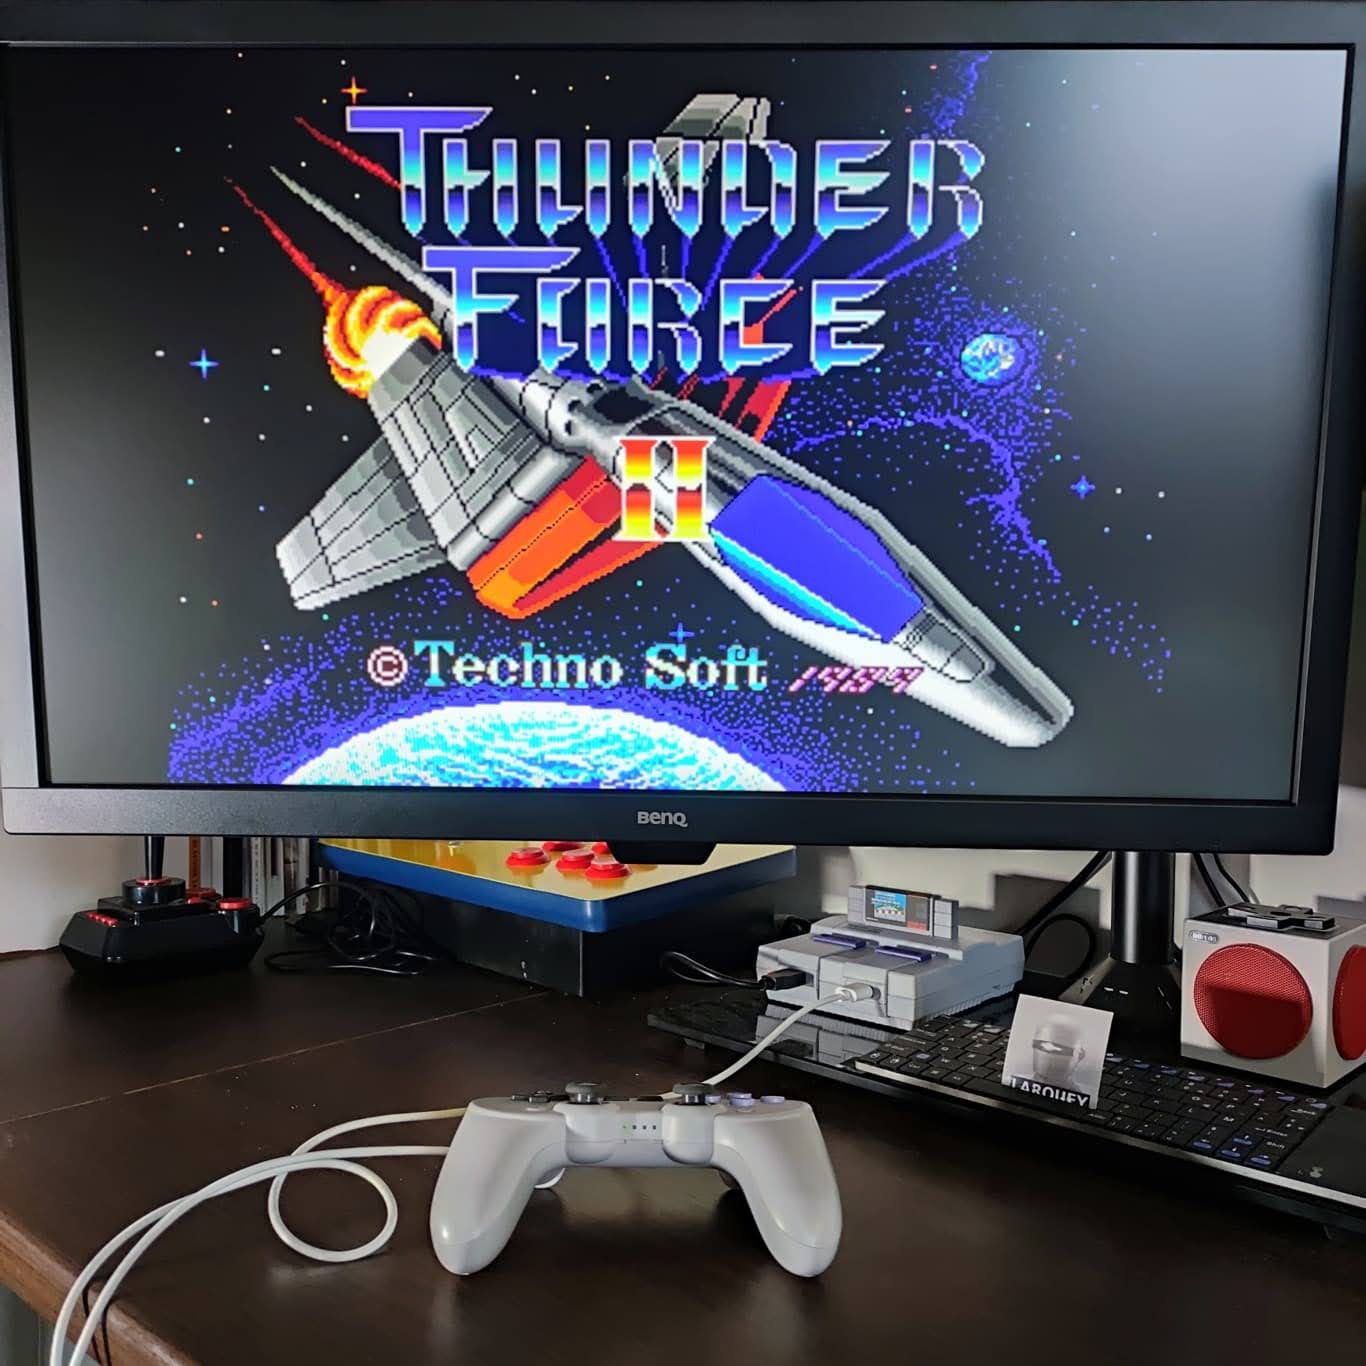 Larquey: Thunder Force II (Sega Genesis / MegaDrive Emulated) 45,000 points on 2023-01-15 01:56:14